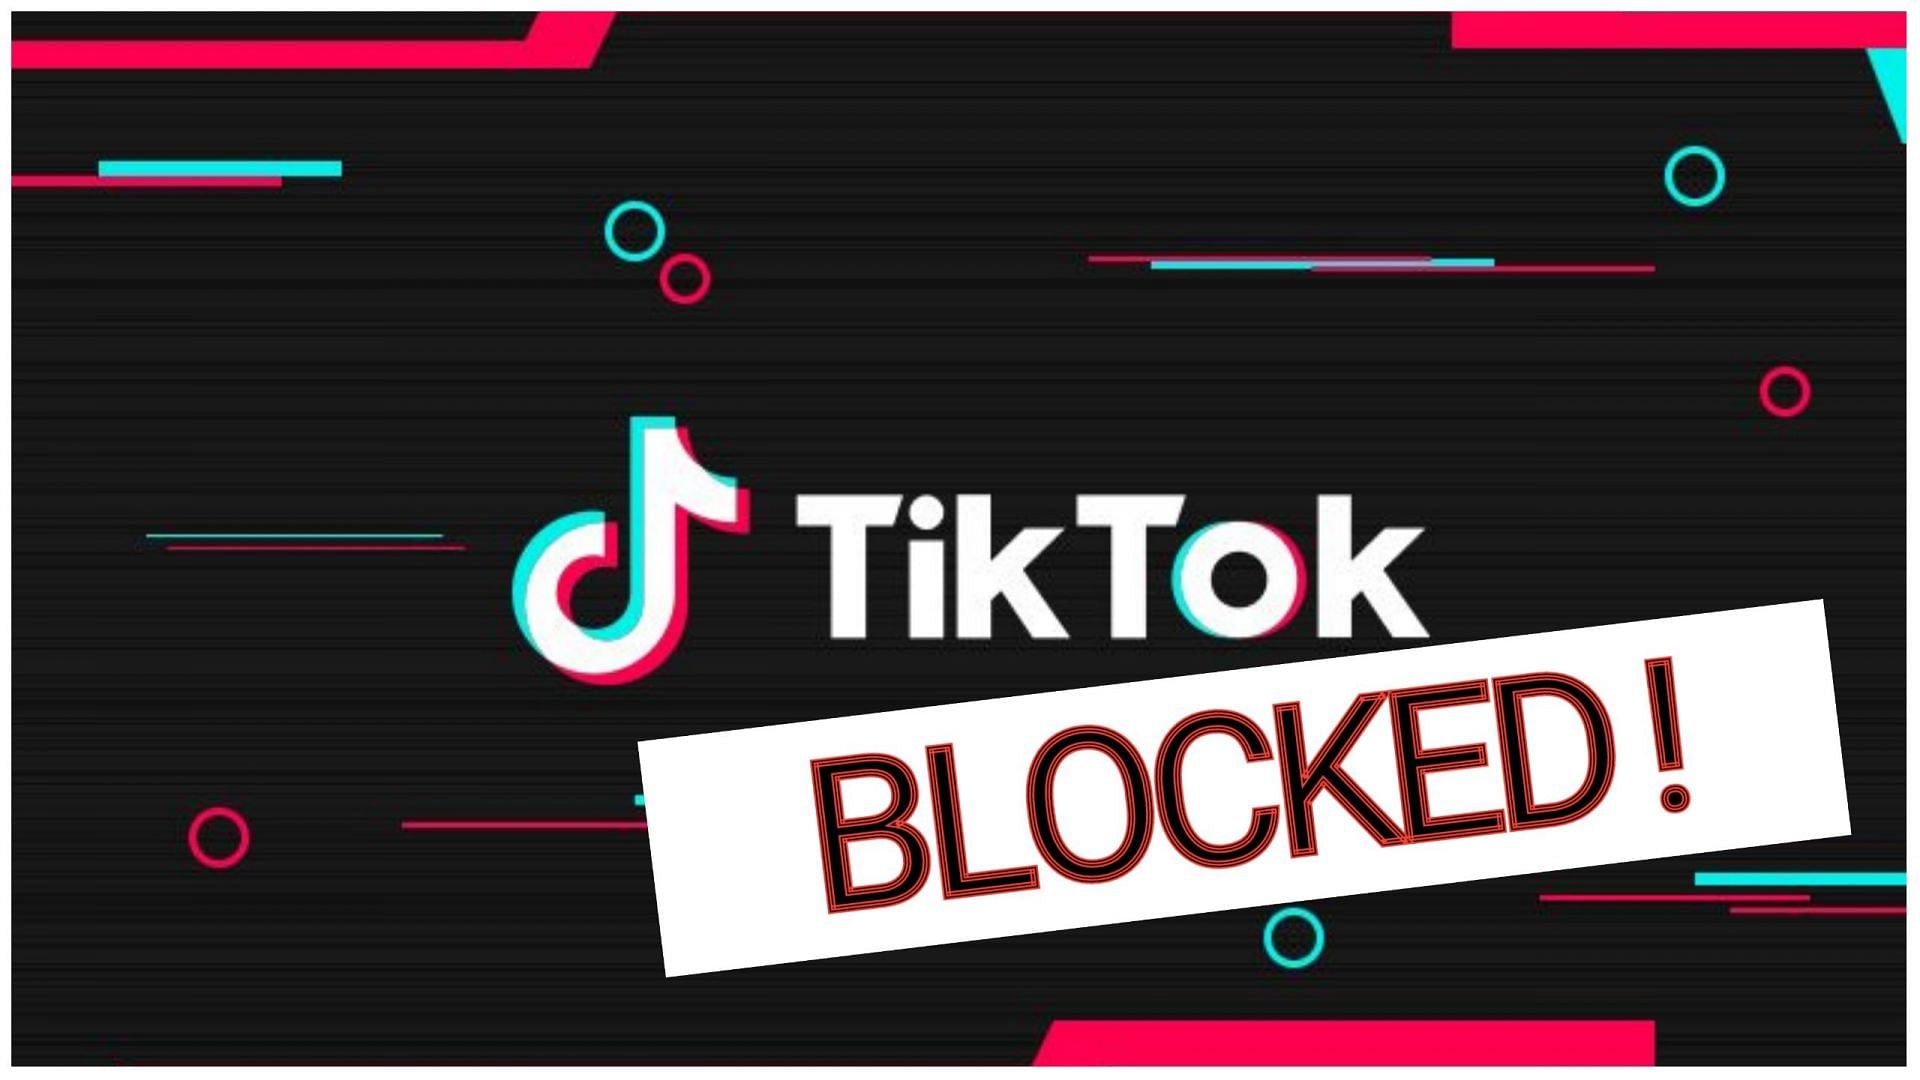 Users ca easily block and unblock people on the app (Image via Sportskeeda)